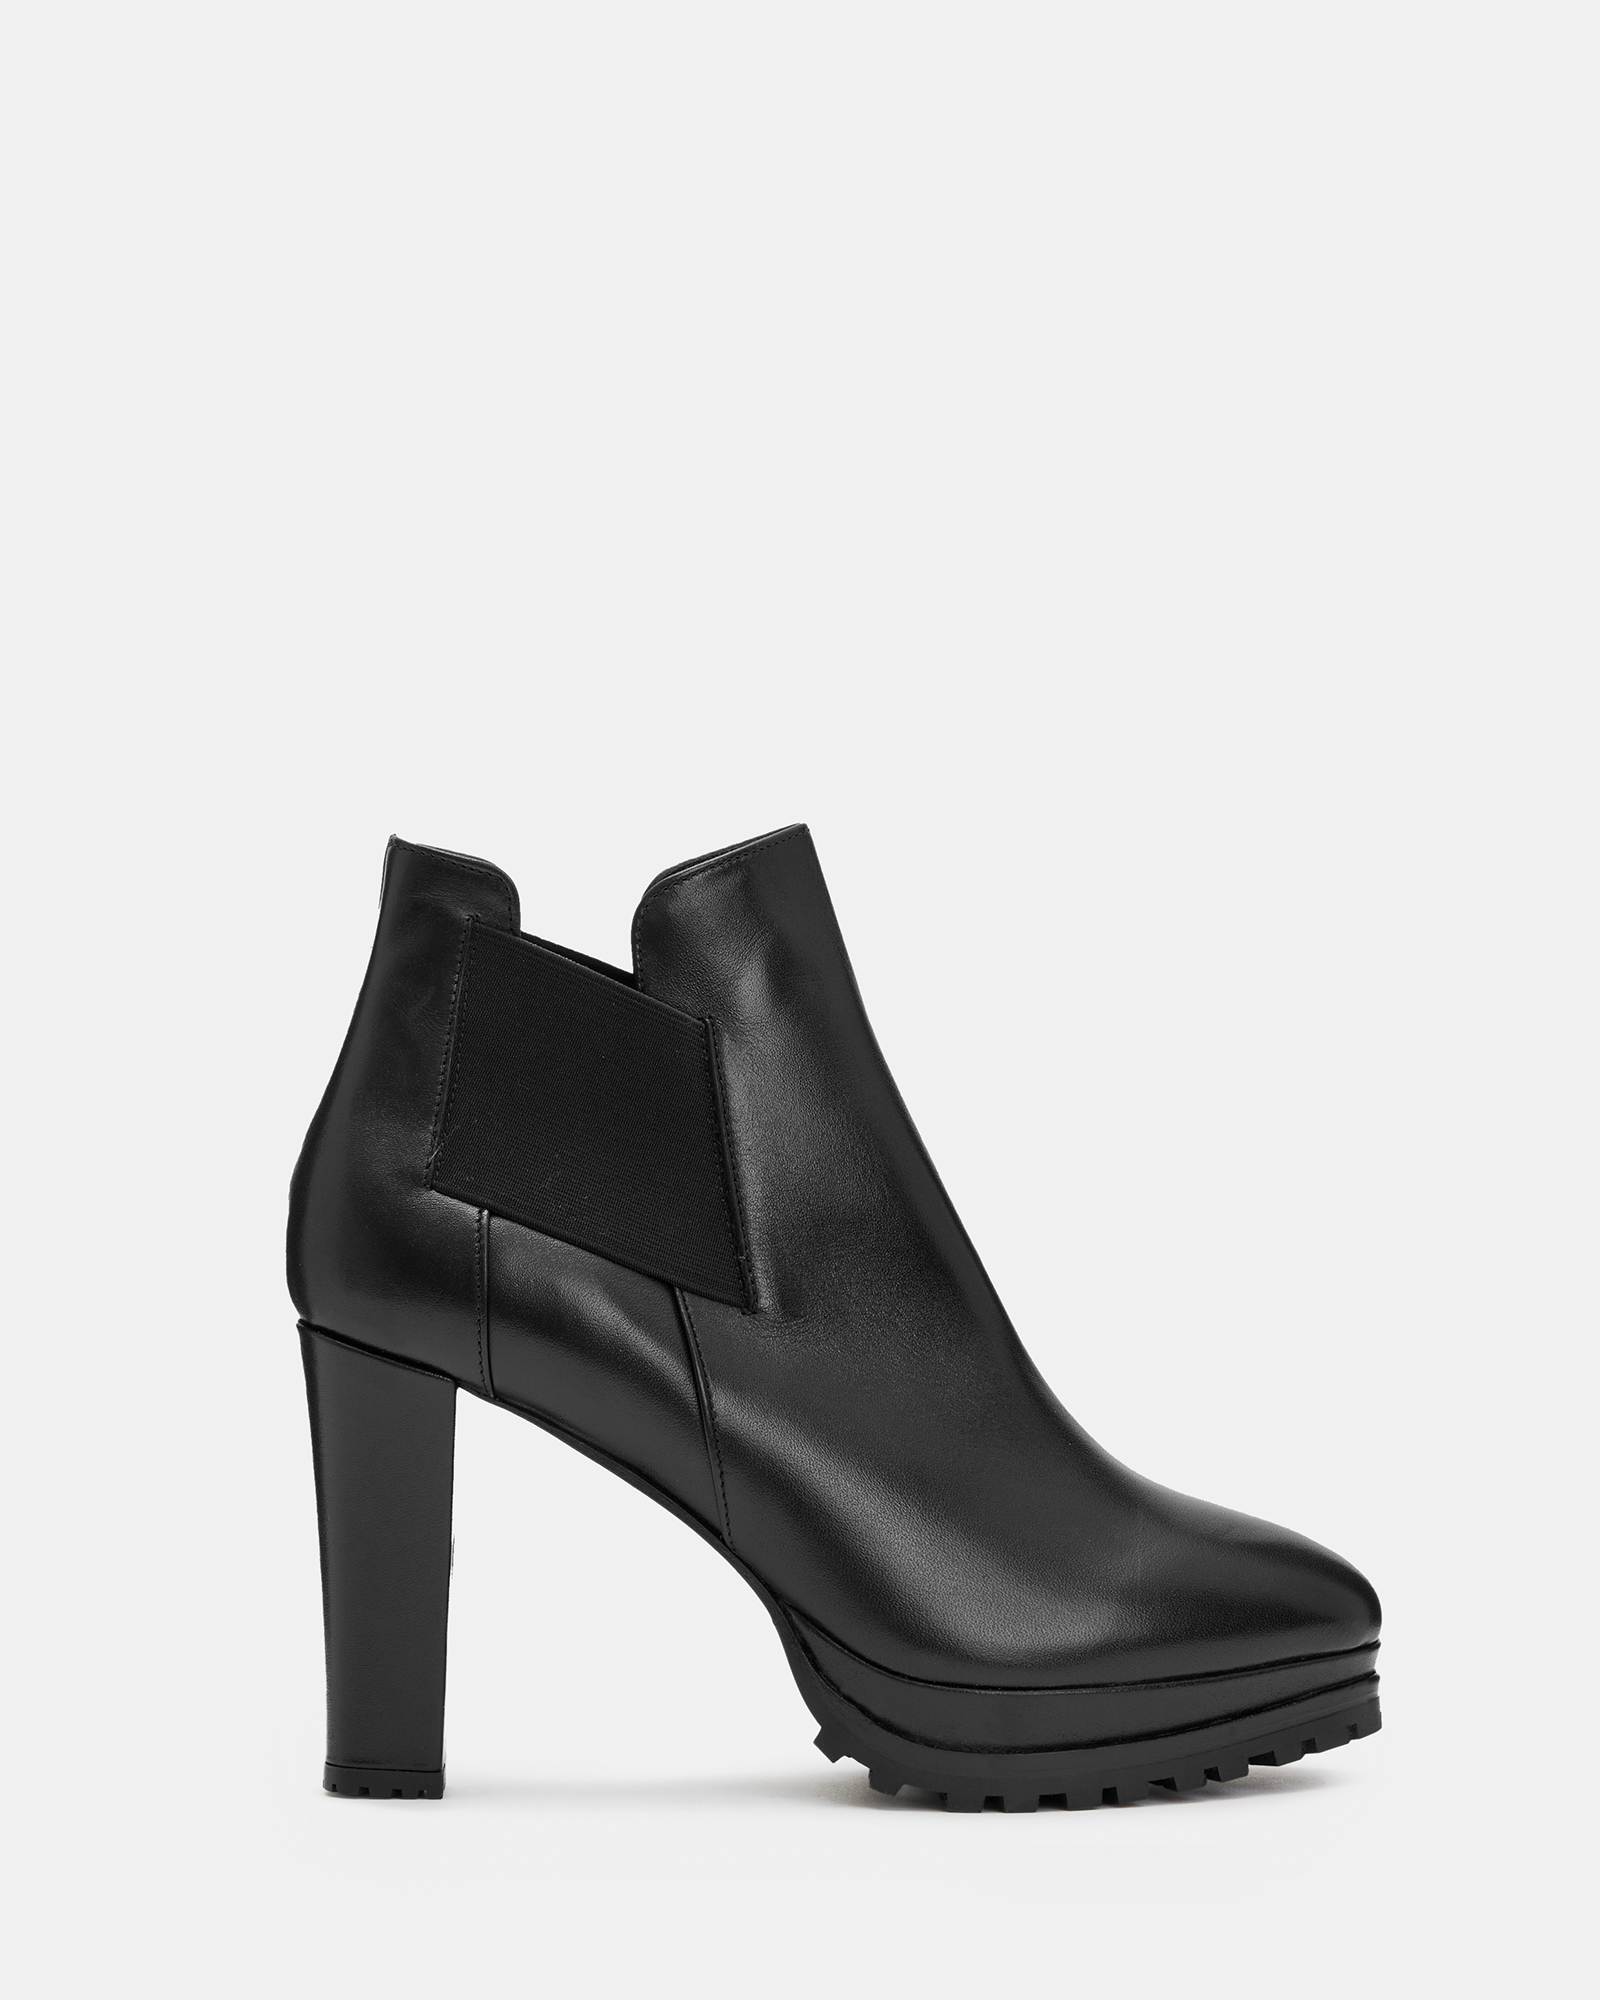 AllSaints Sarris Heeled Leather Boots,, Black, Size: UK